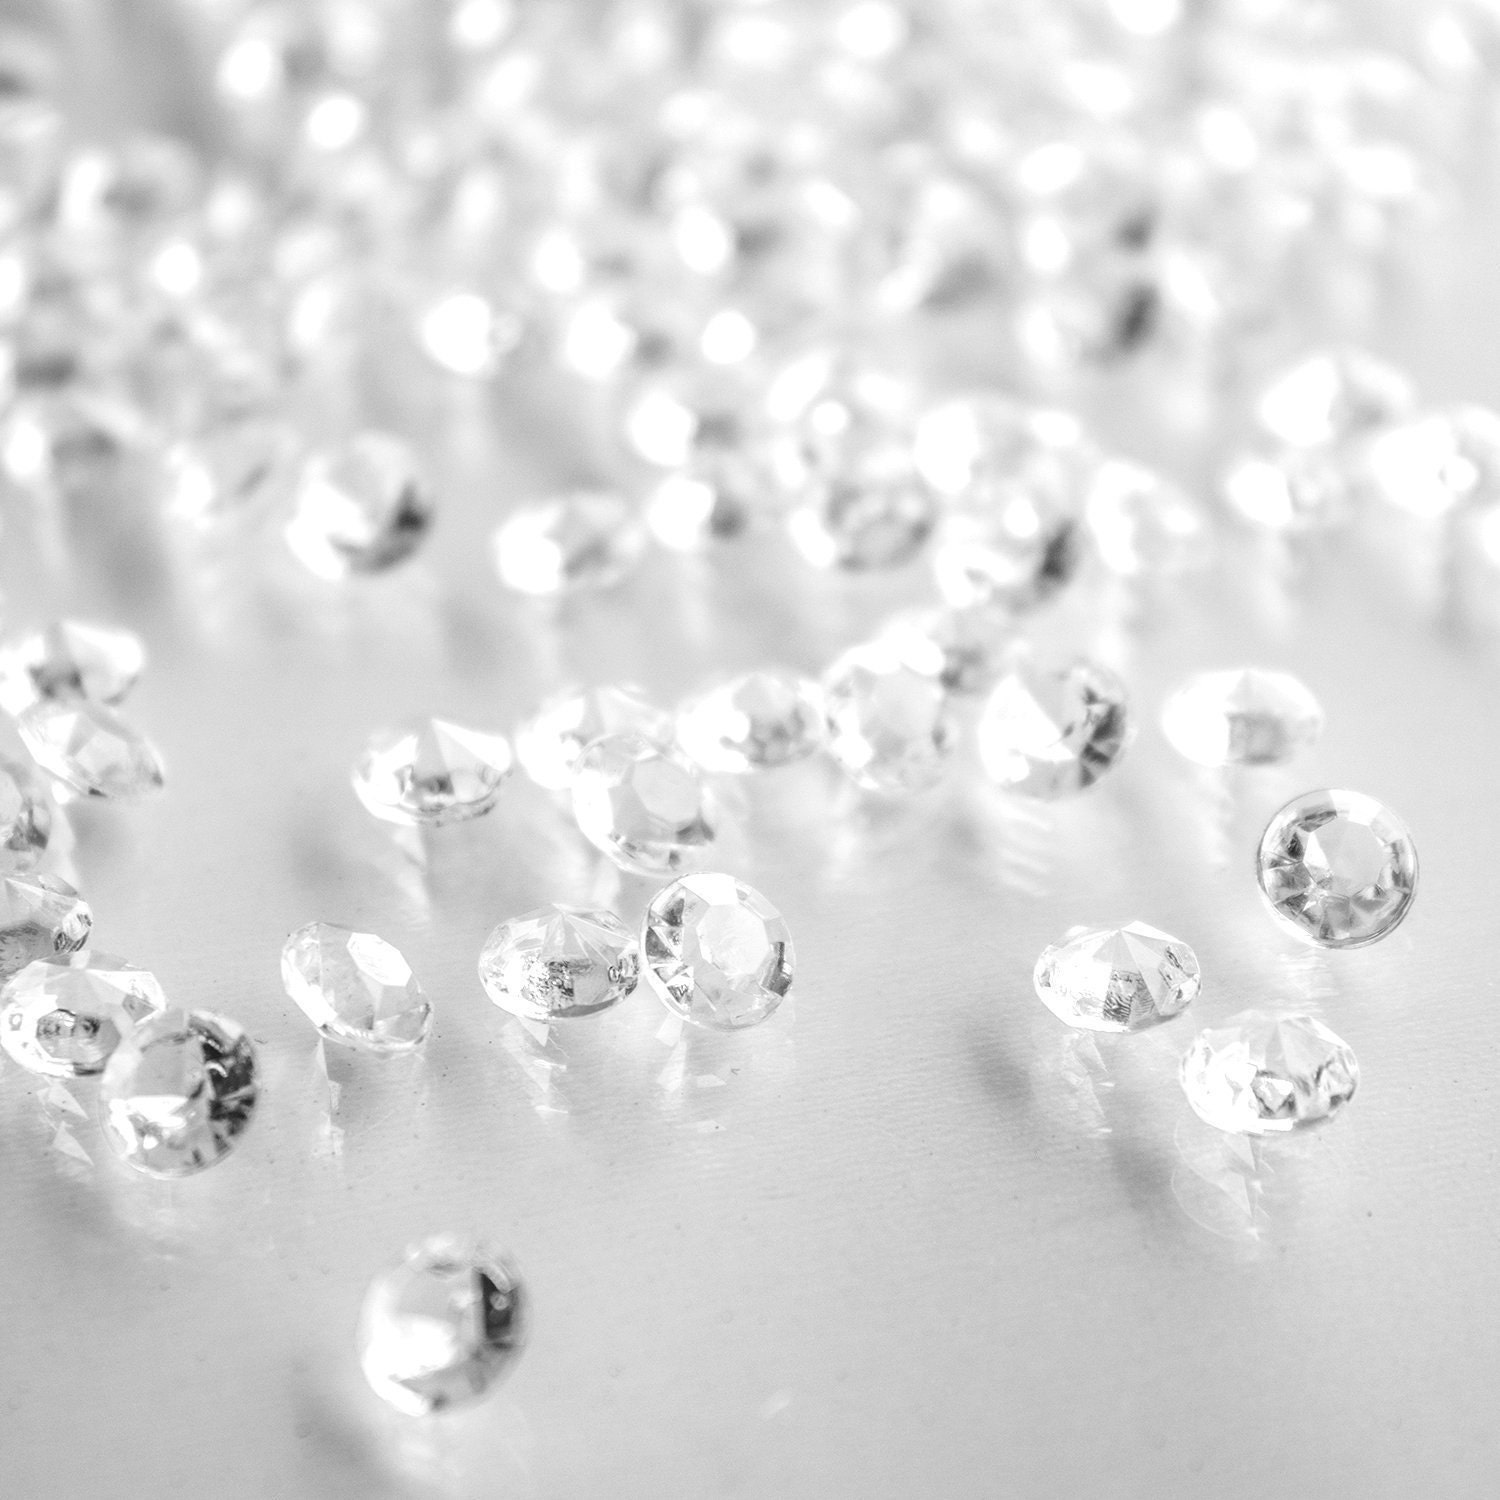 100 Fake Diamonds Vase Filler Confetti Diamond Gems Fake Diamonds Table  Scatter Party Decoration Party Favors Wedding Centerpieces 